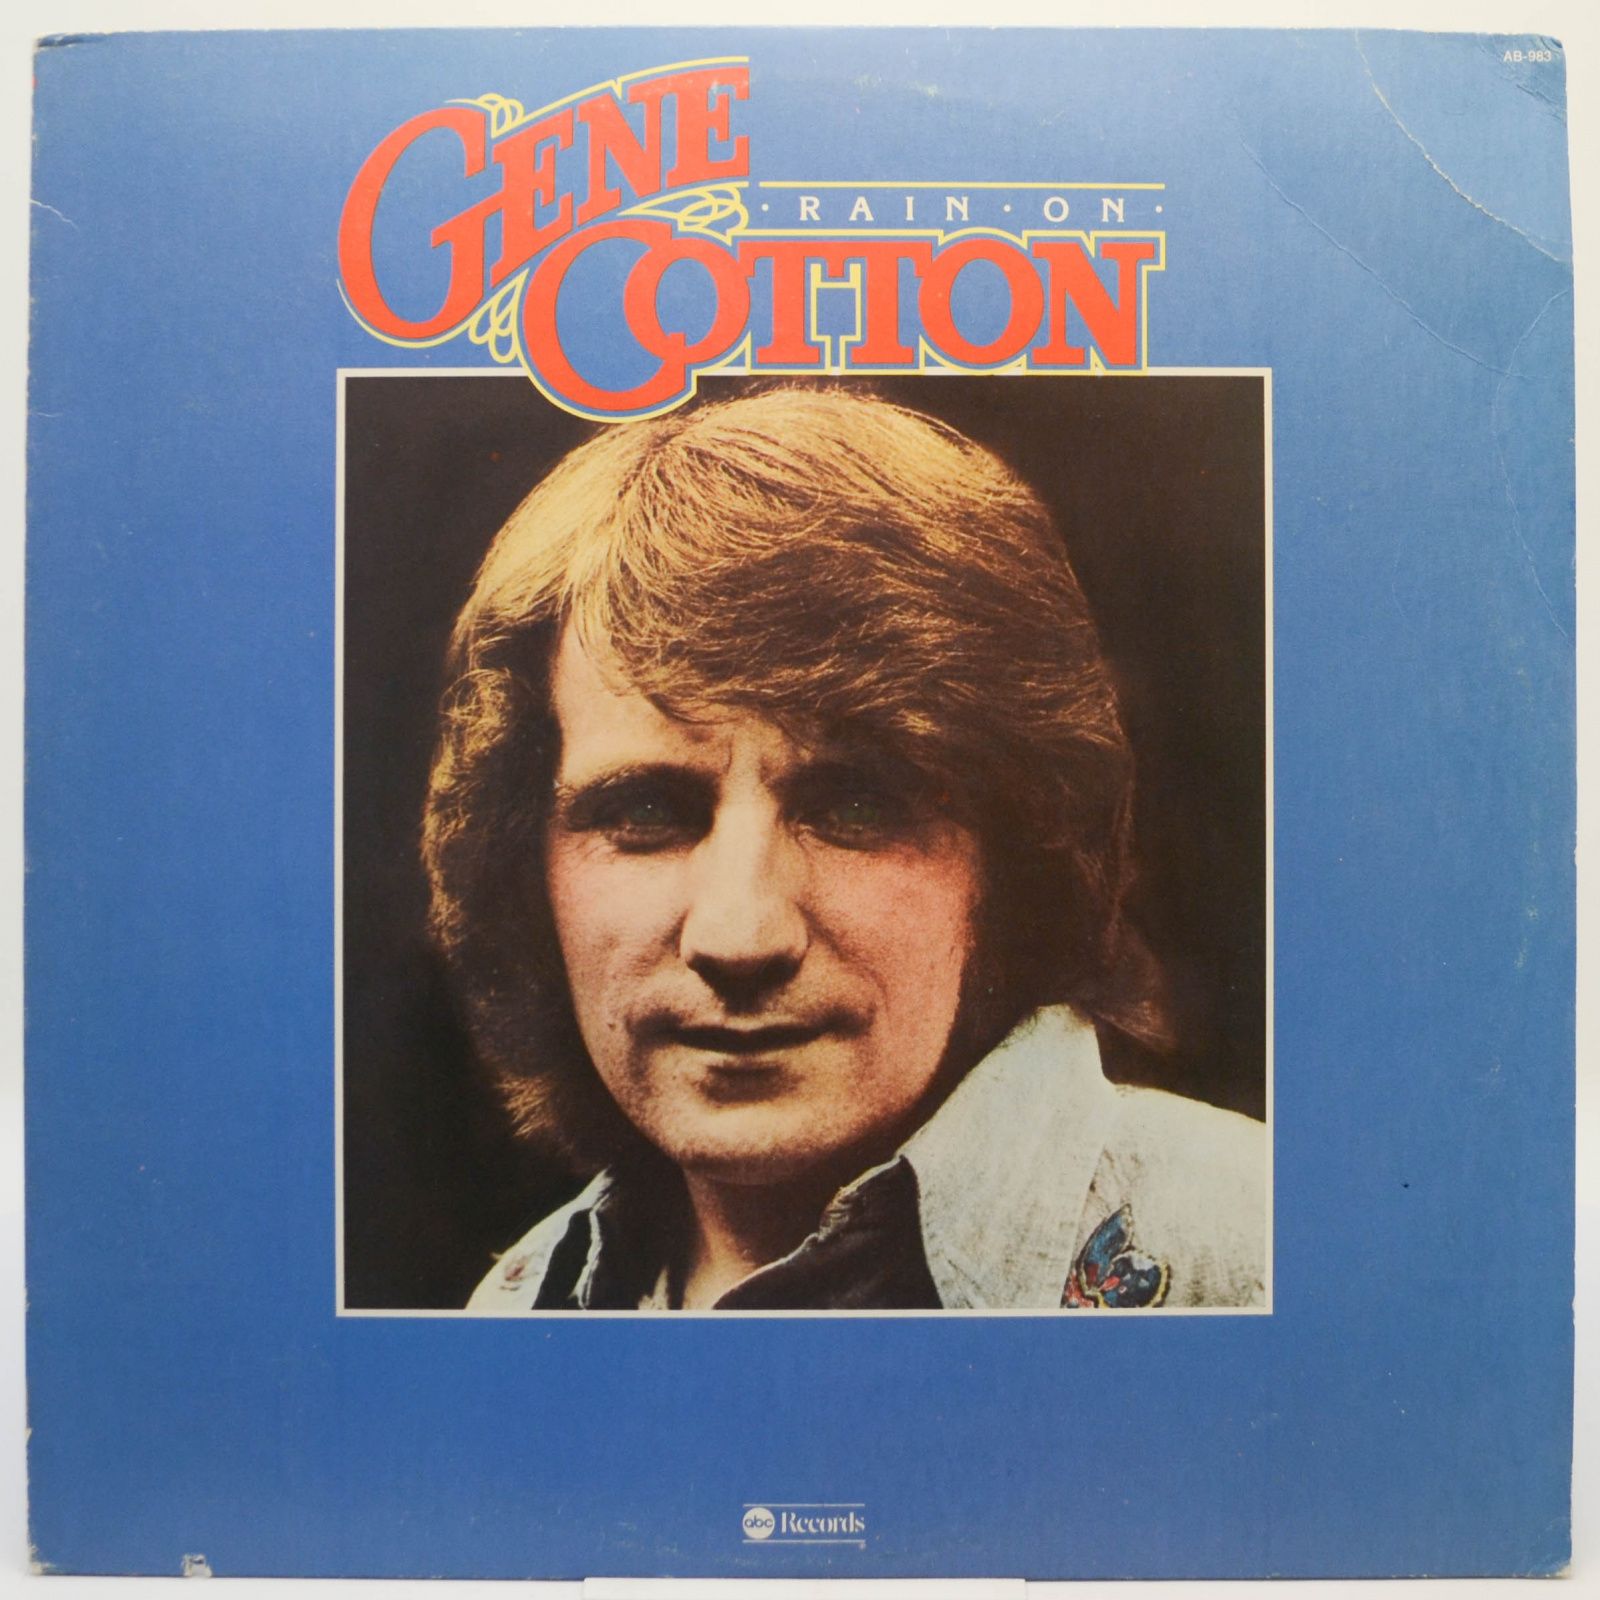 Gene Cotton — Rain On (USA), 1976